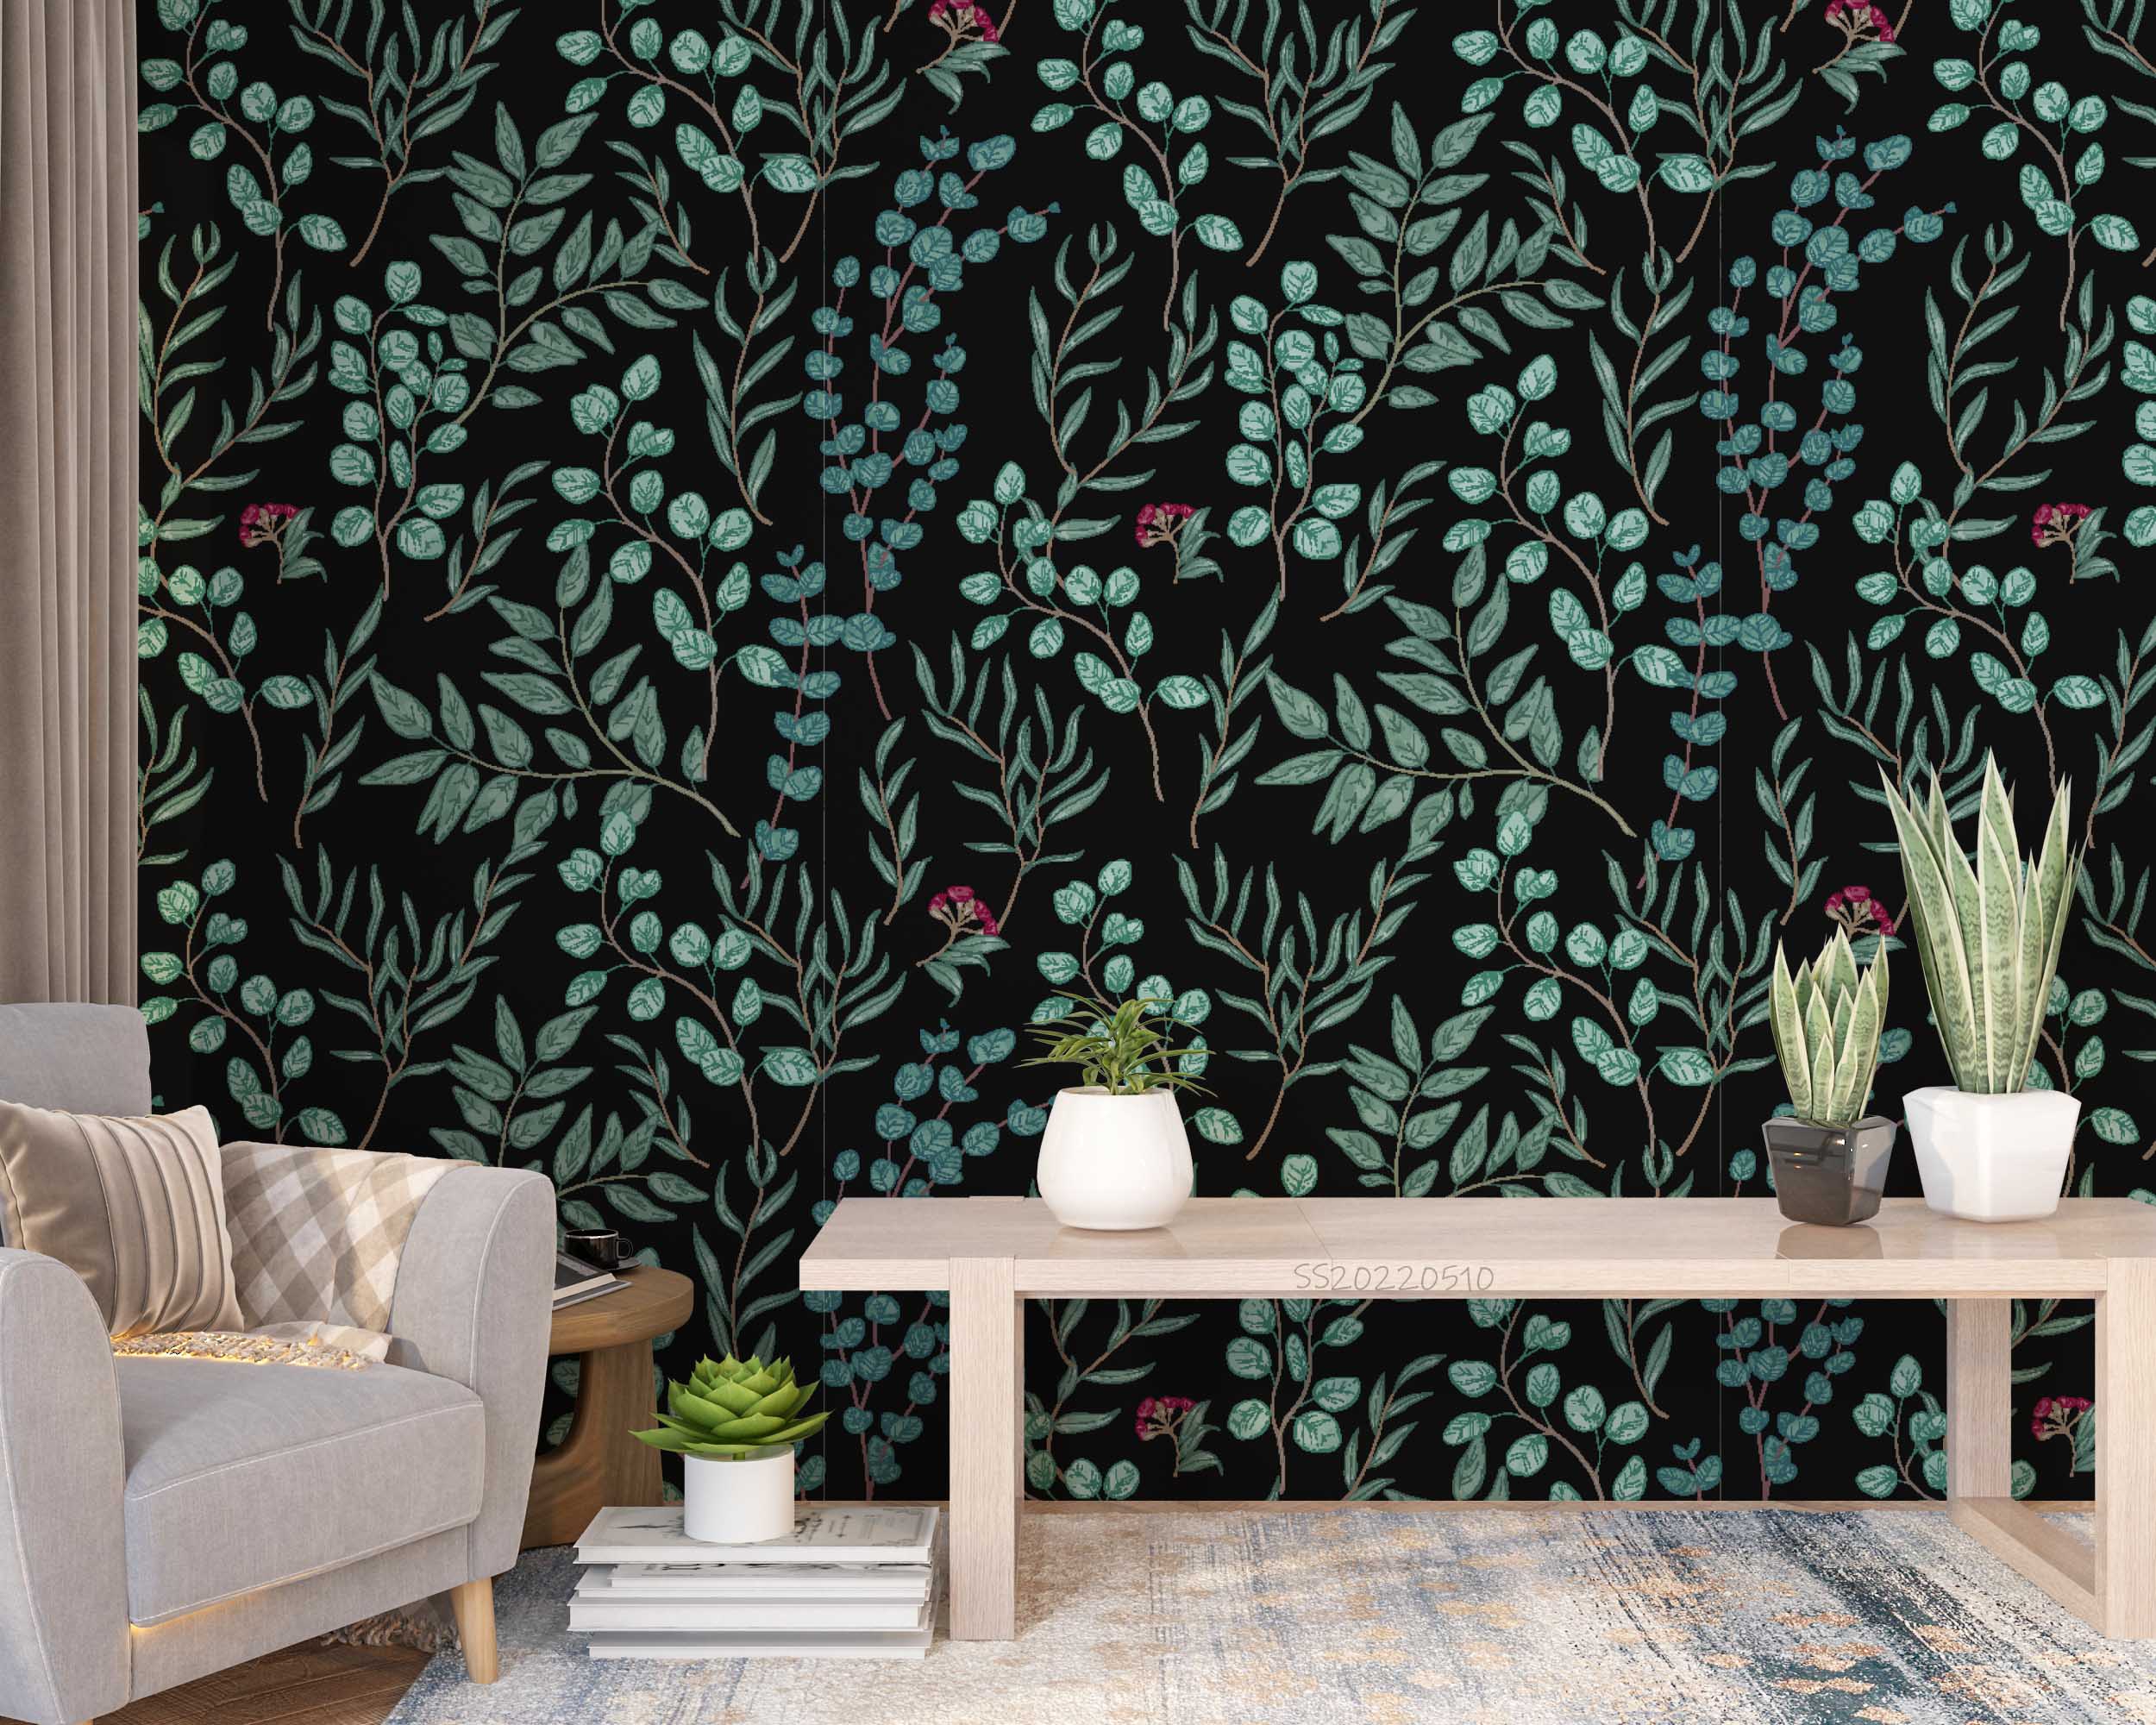 3D Vintage Botanical Eucalyptus Branches Flowers Black Background Wall Mural Wallpaper GD 4056- Jess Art Decoration